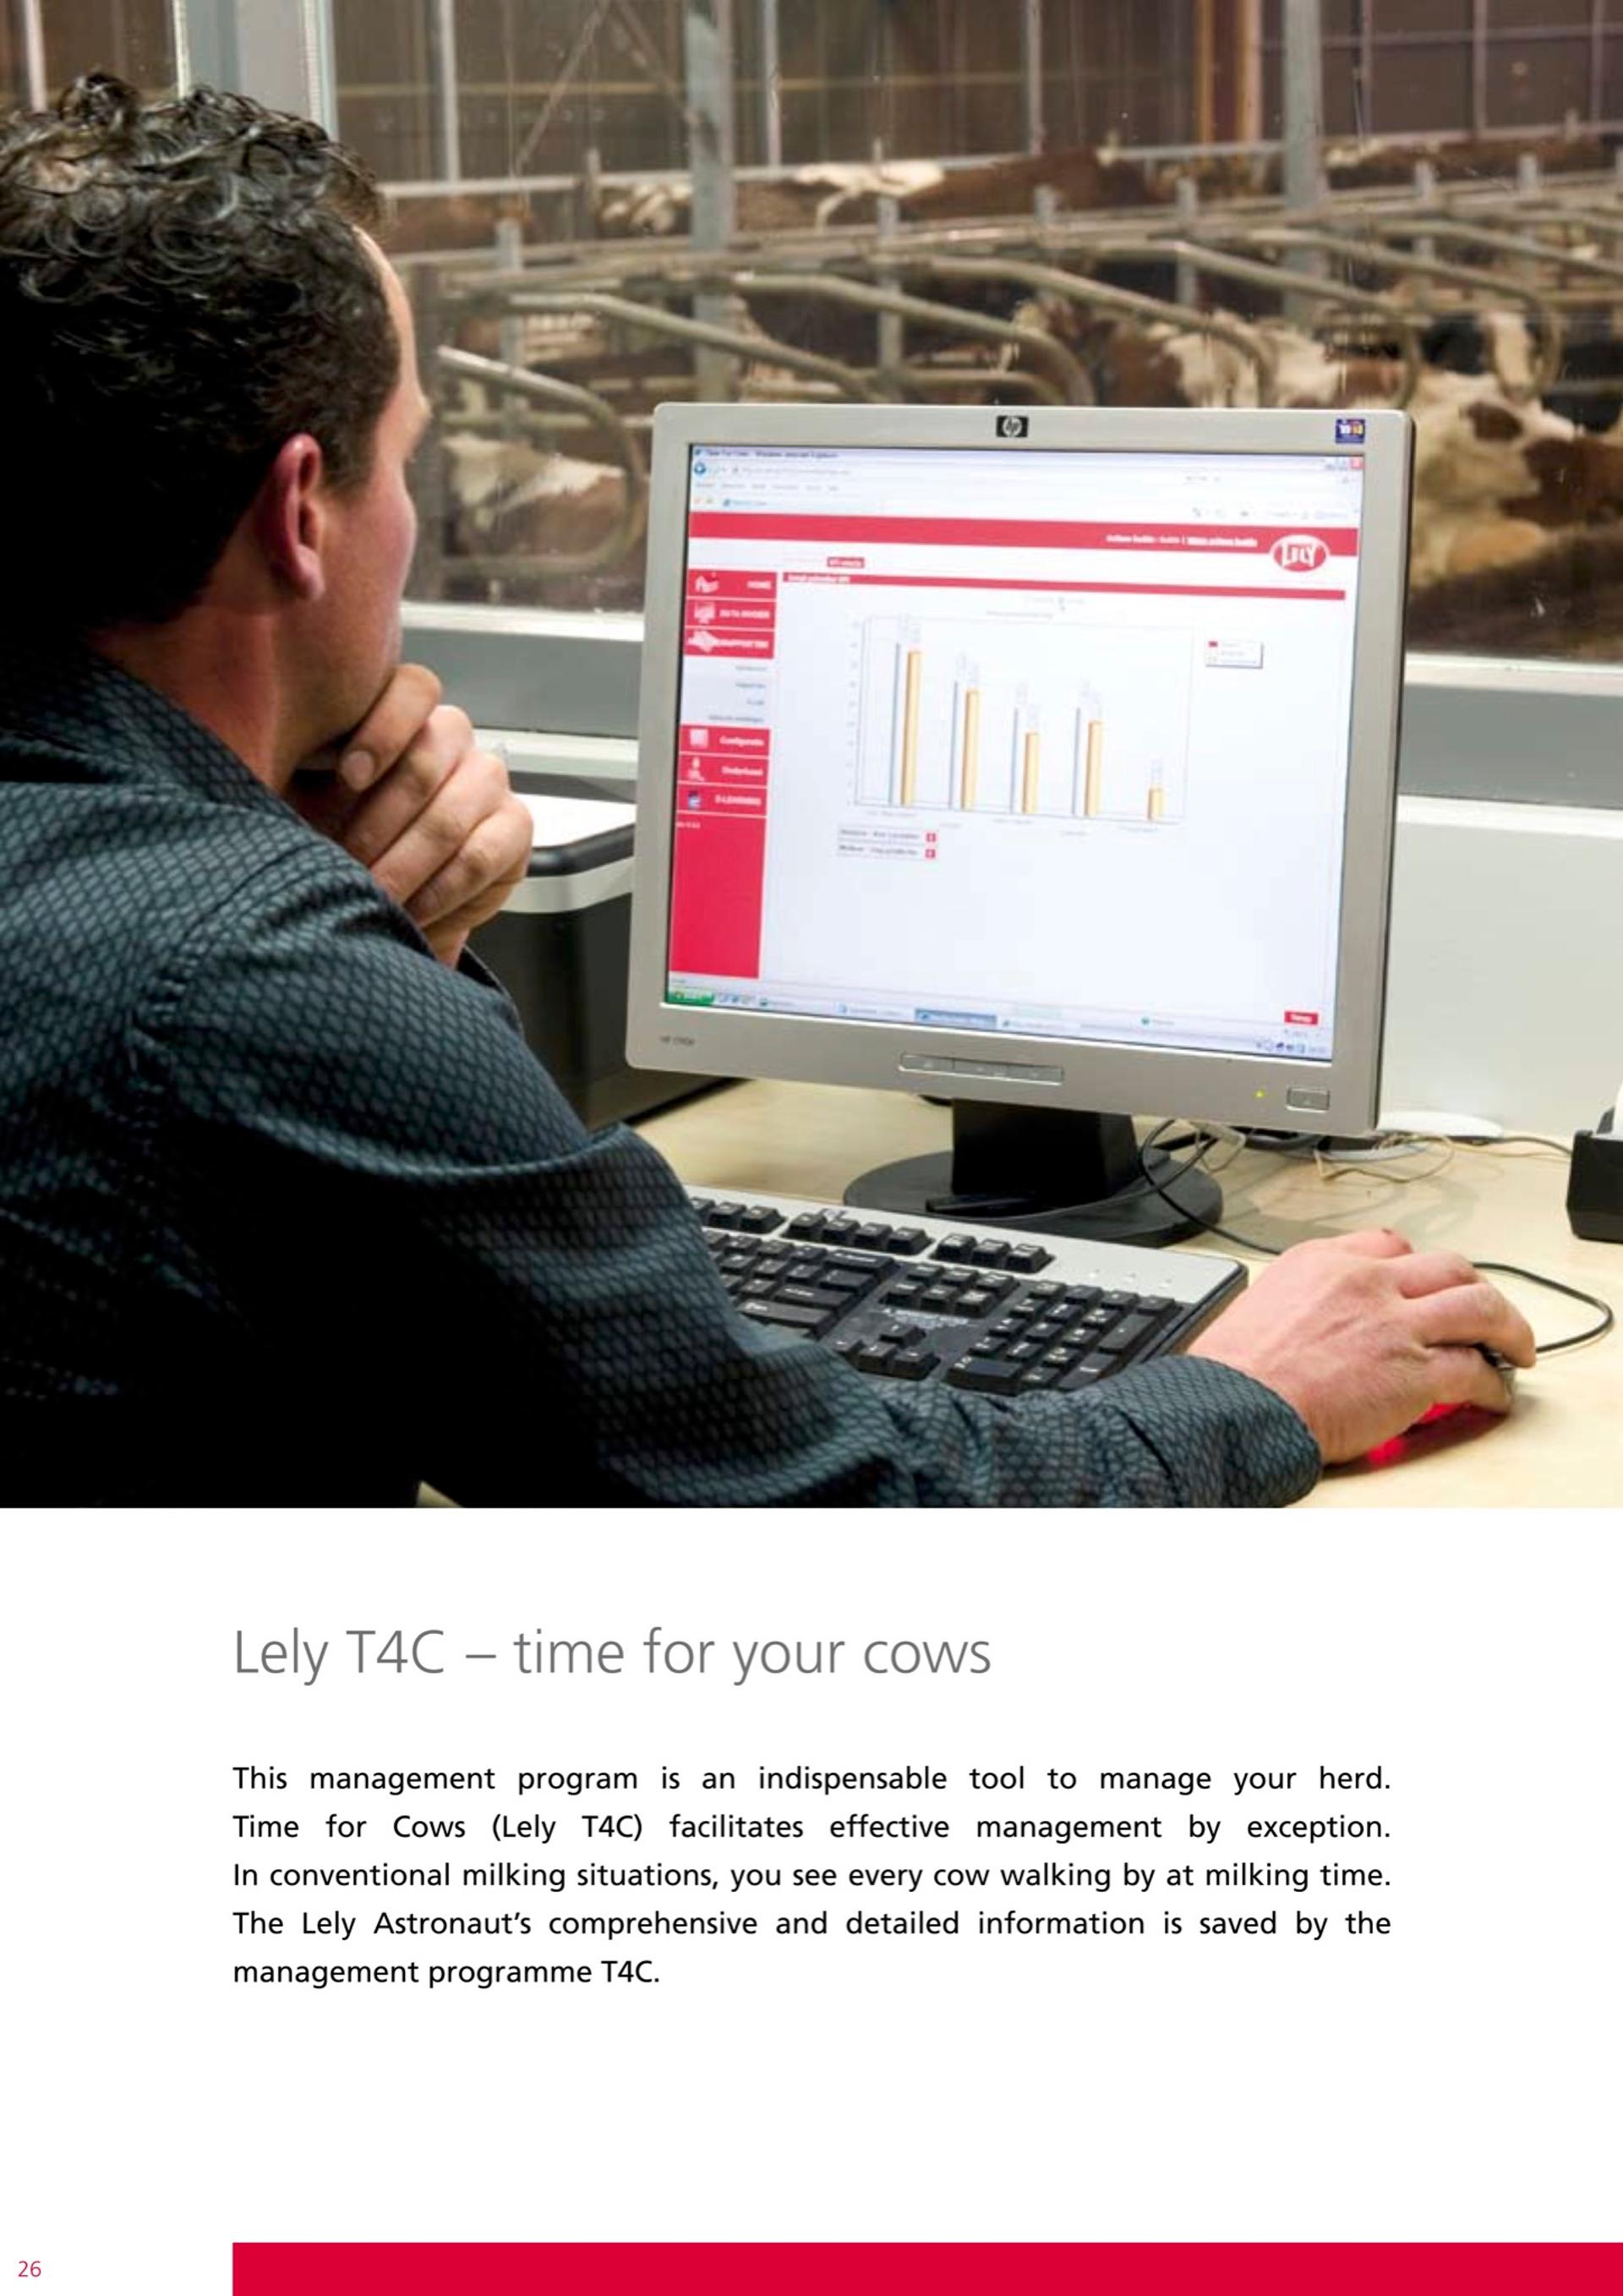 Digital dairy farmer: minimal cow contact.